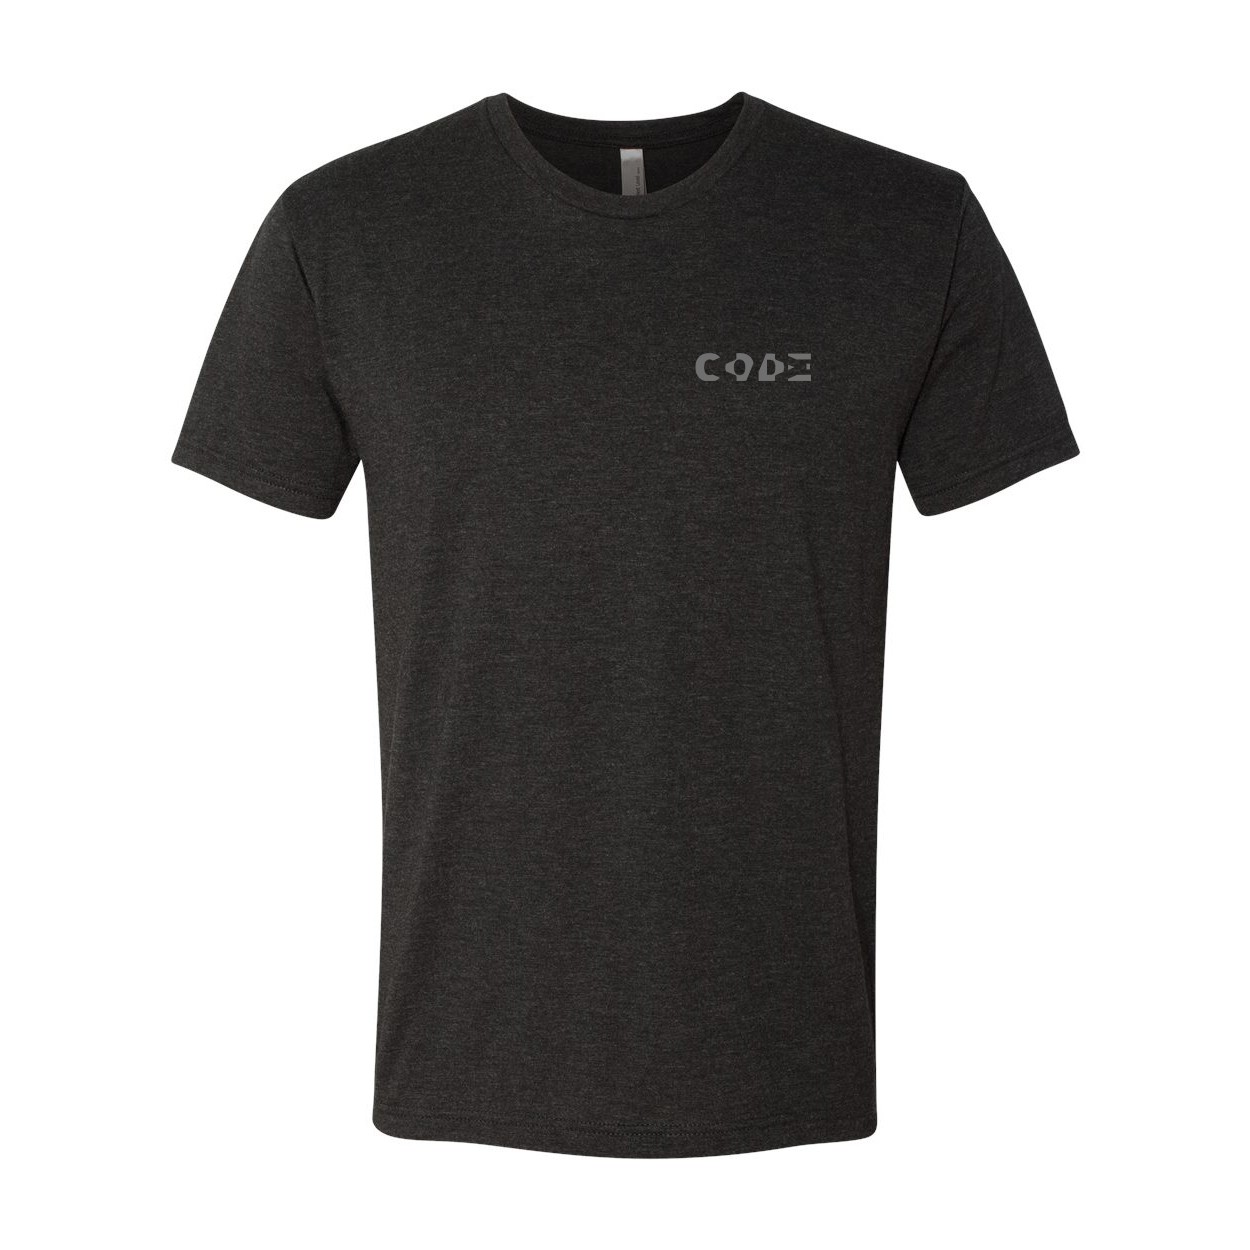 Code Tag Logo Night Out Premium Tri-Blend T-Shirt Vintage Black (Gray Logo)